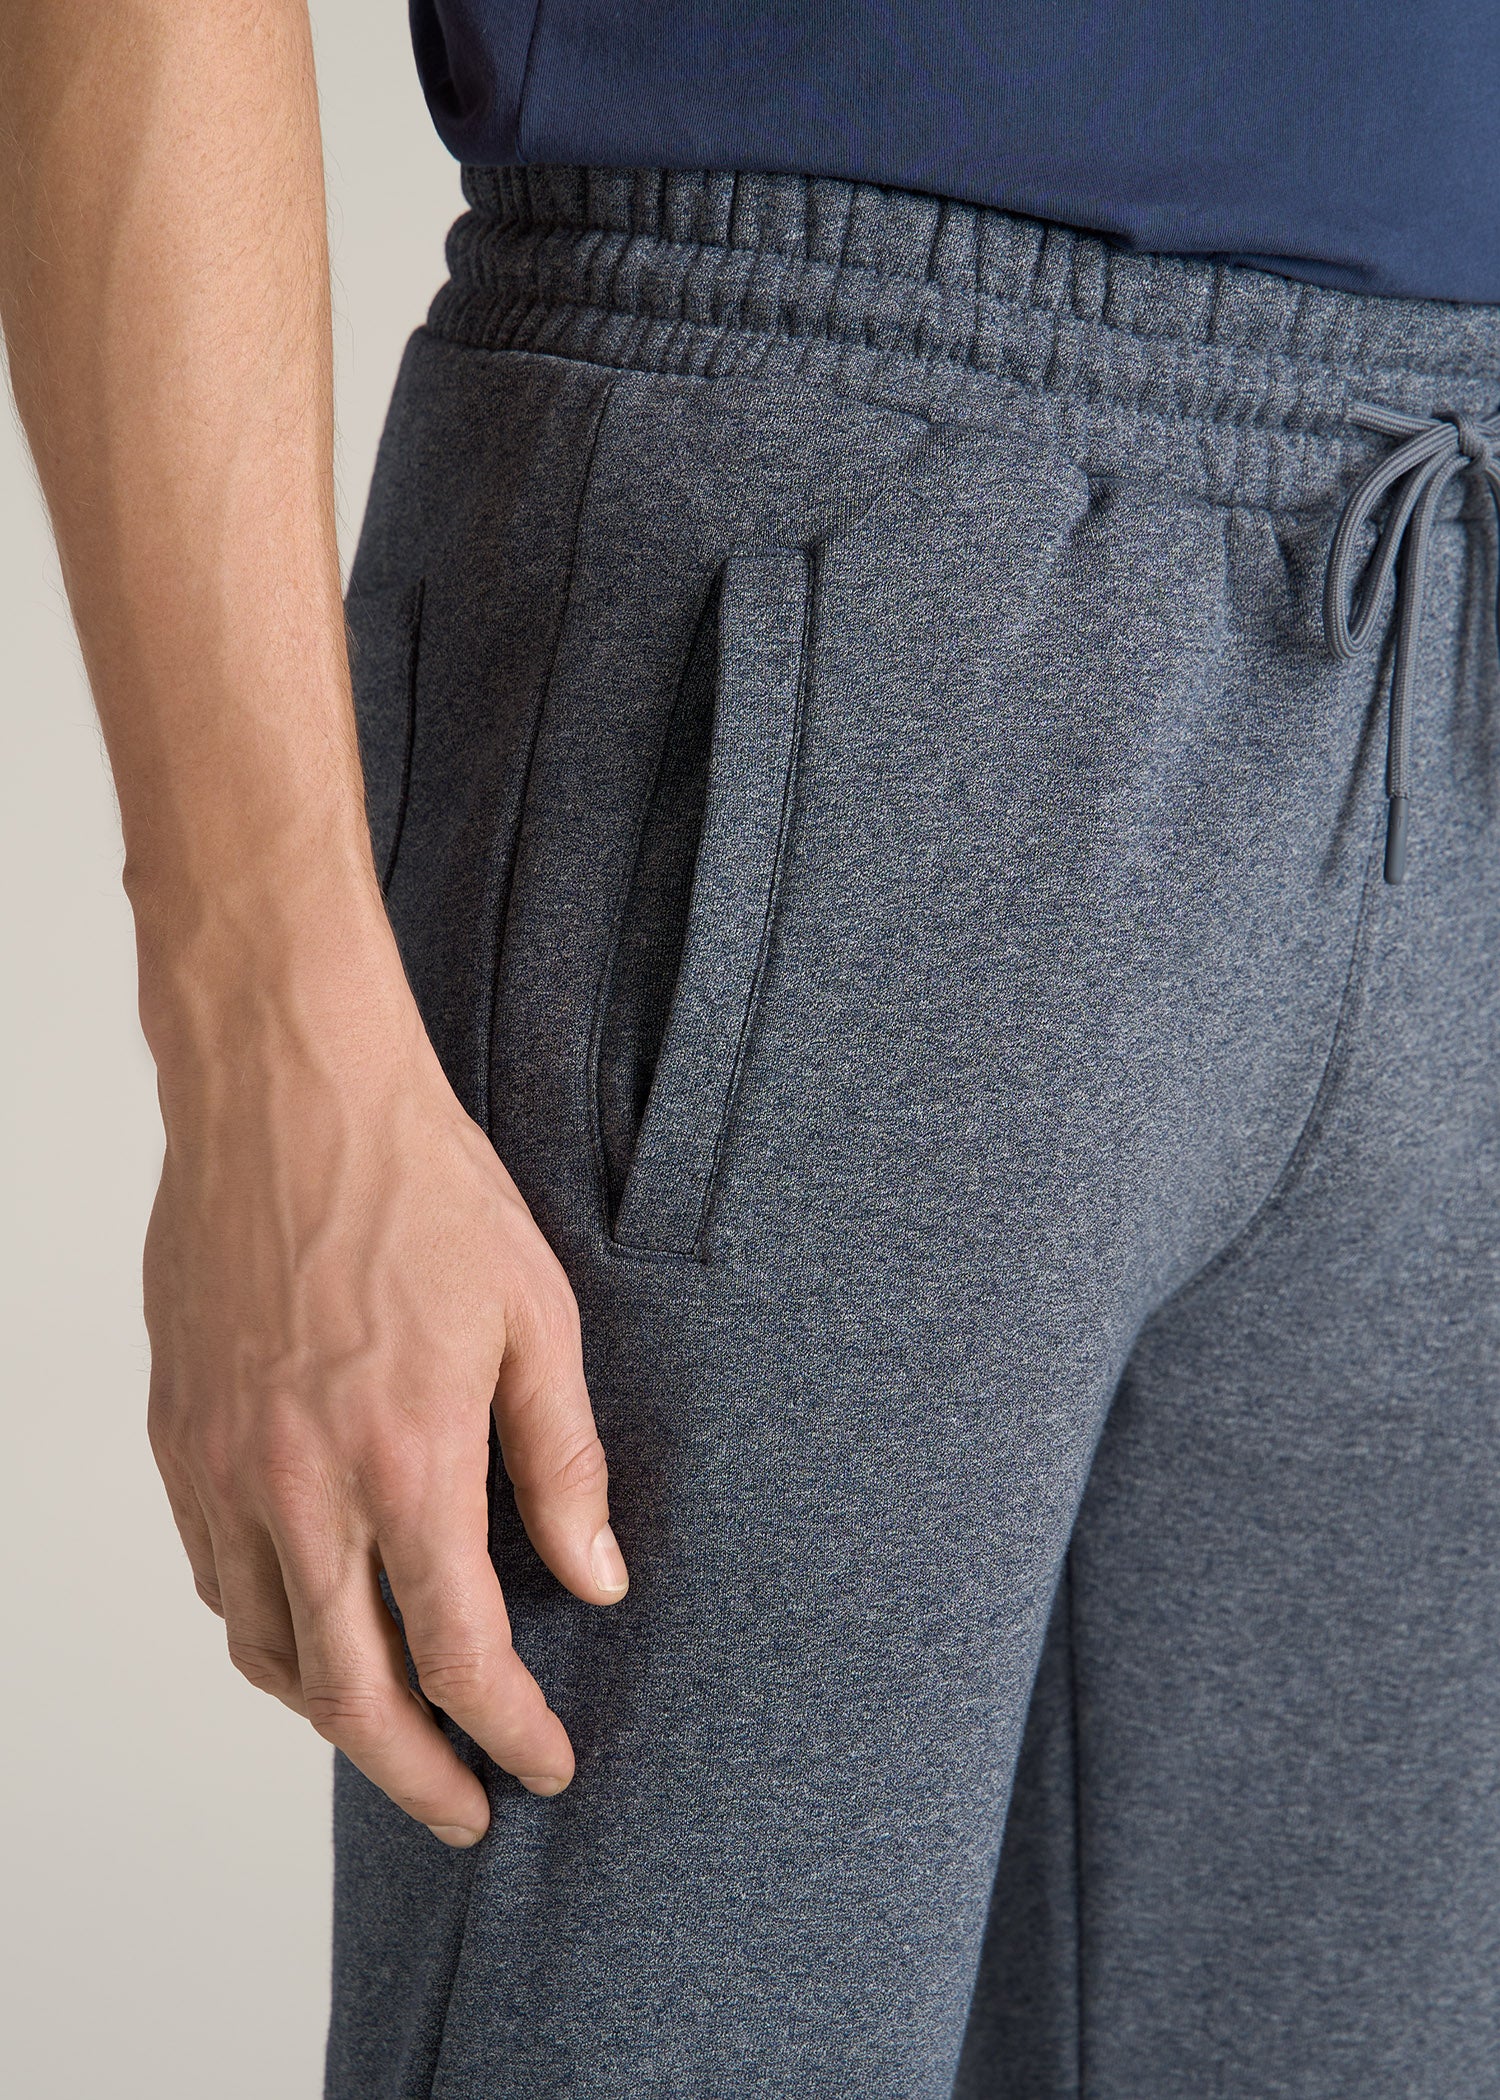 Wearever Fleece Elastic-Bottom Sweatpants for Tall Men in Black